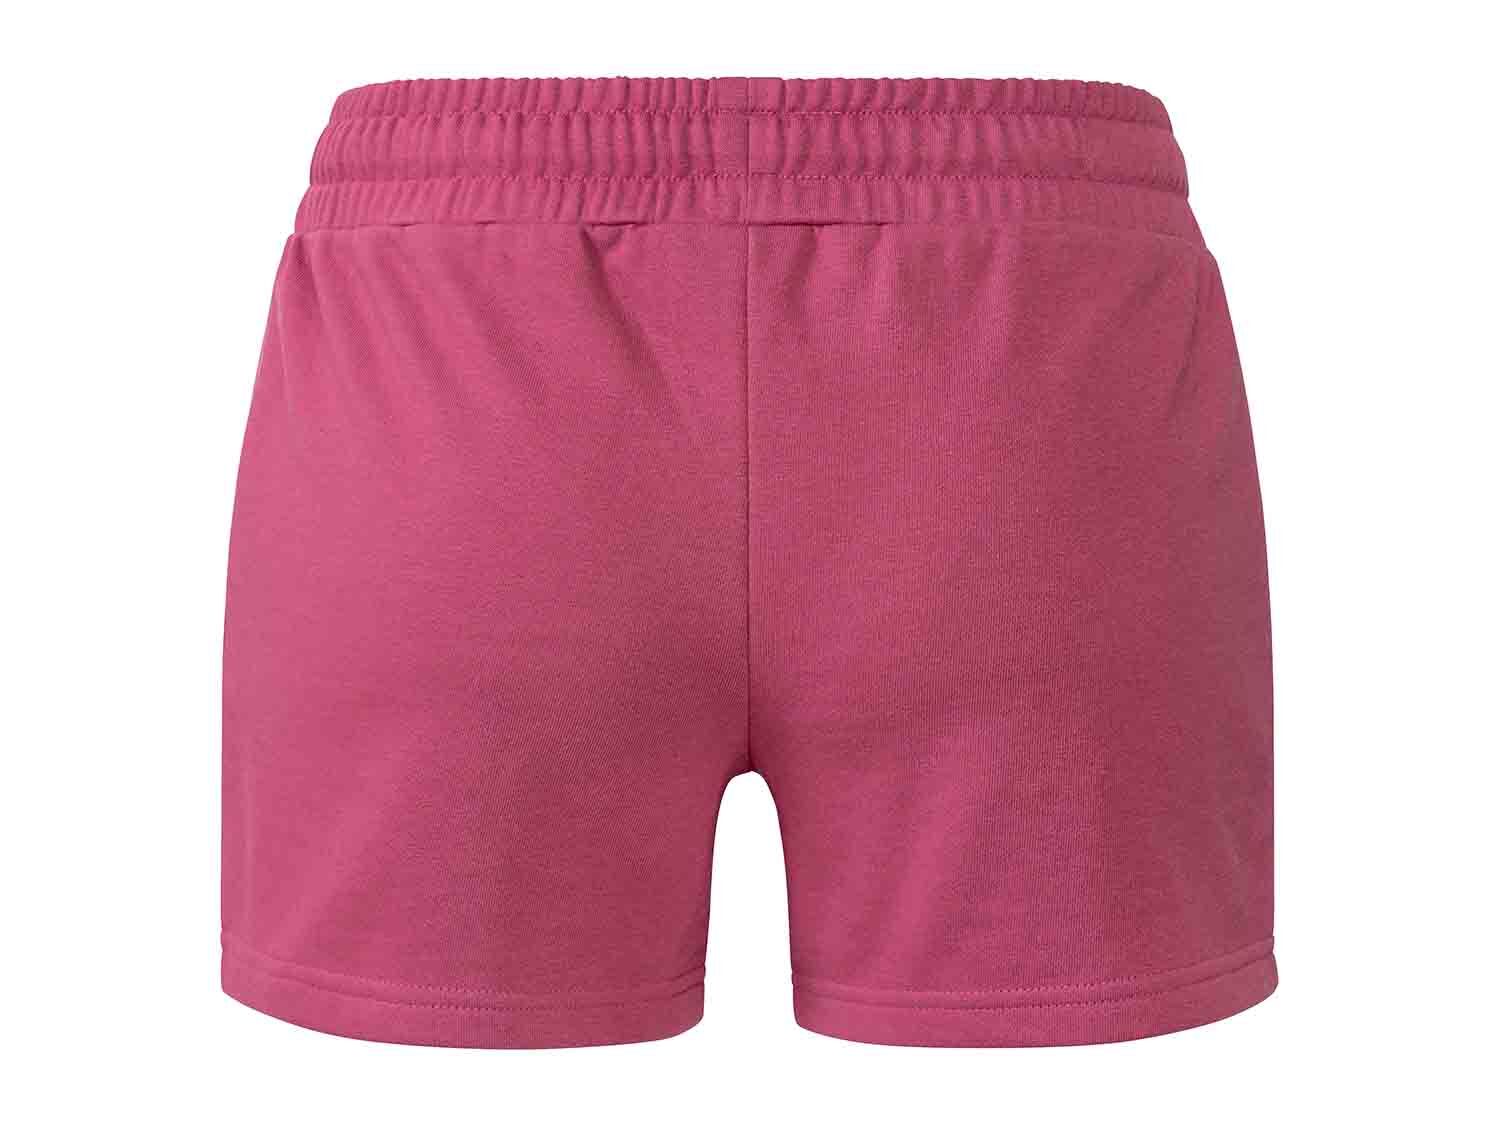 Pantalones cortos de chándal para mujer